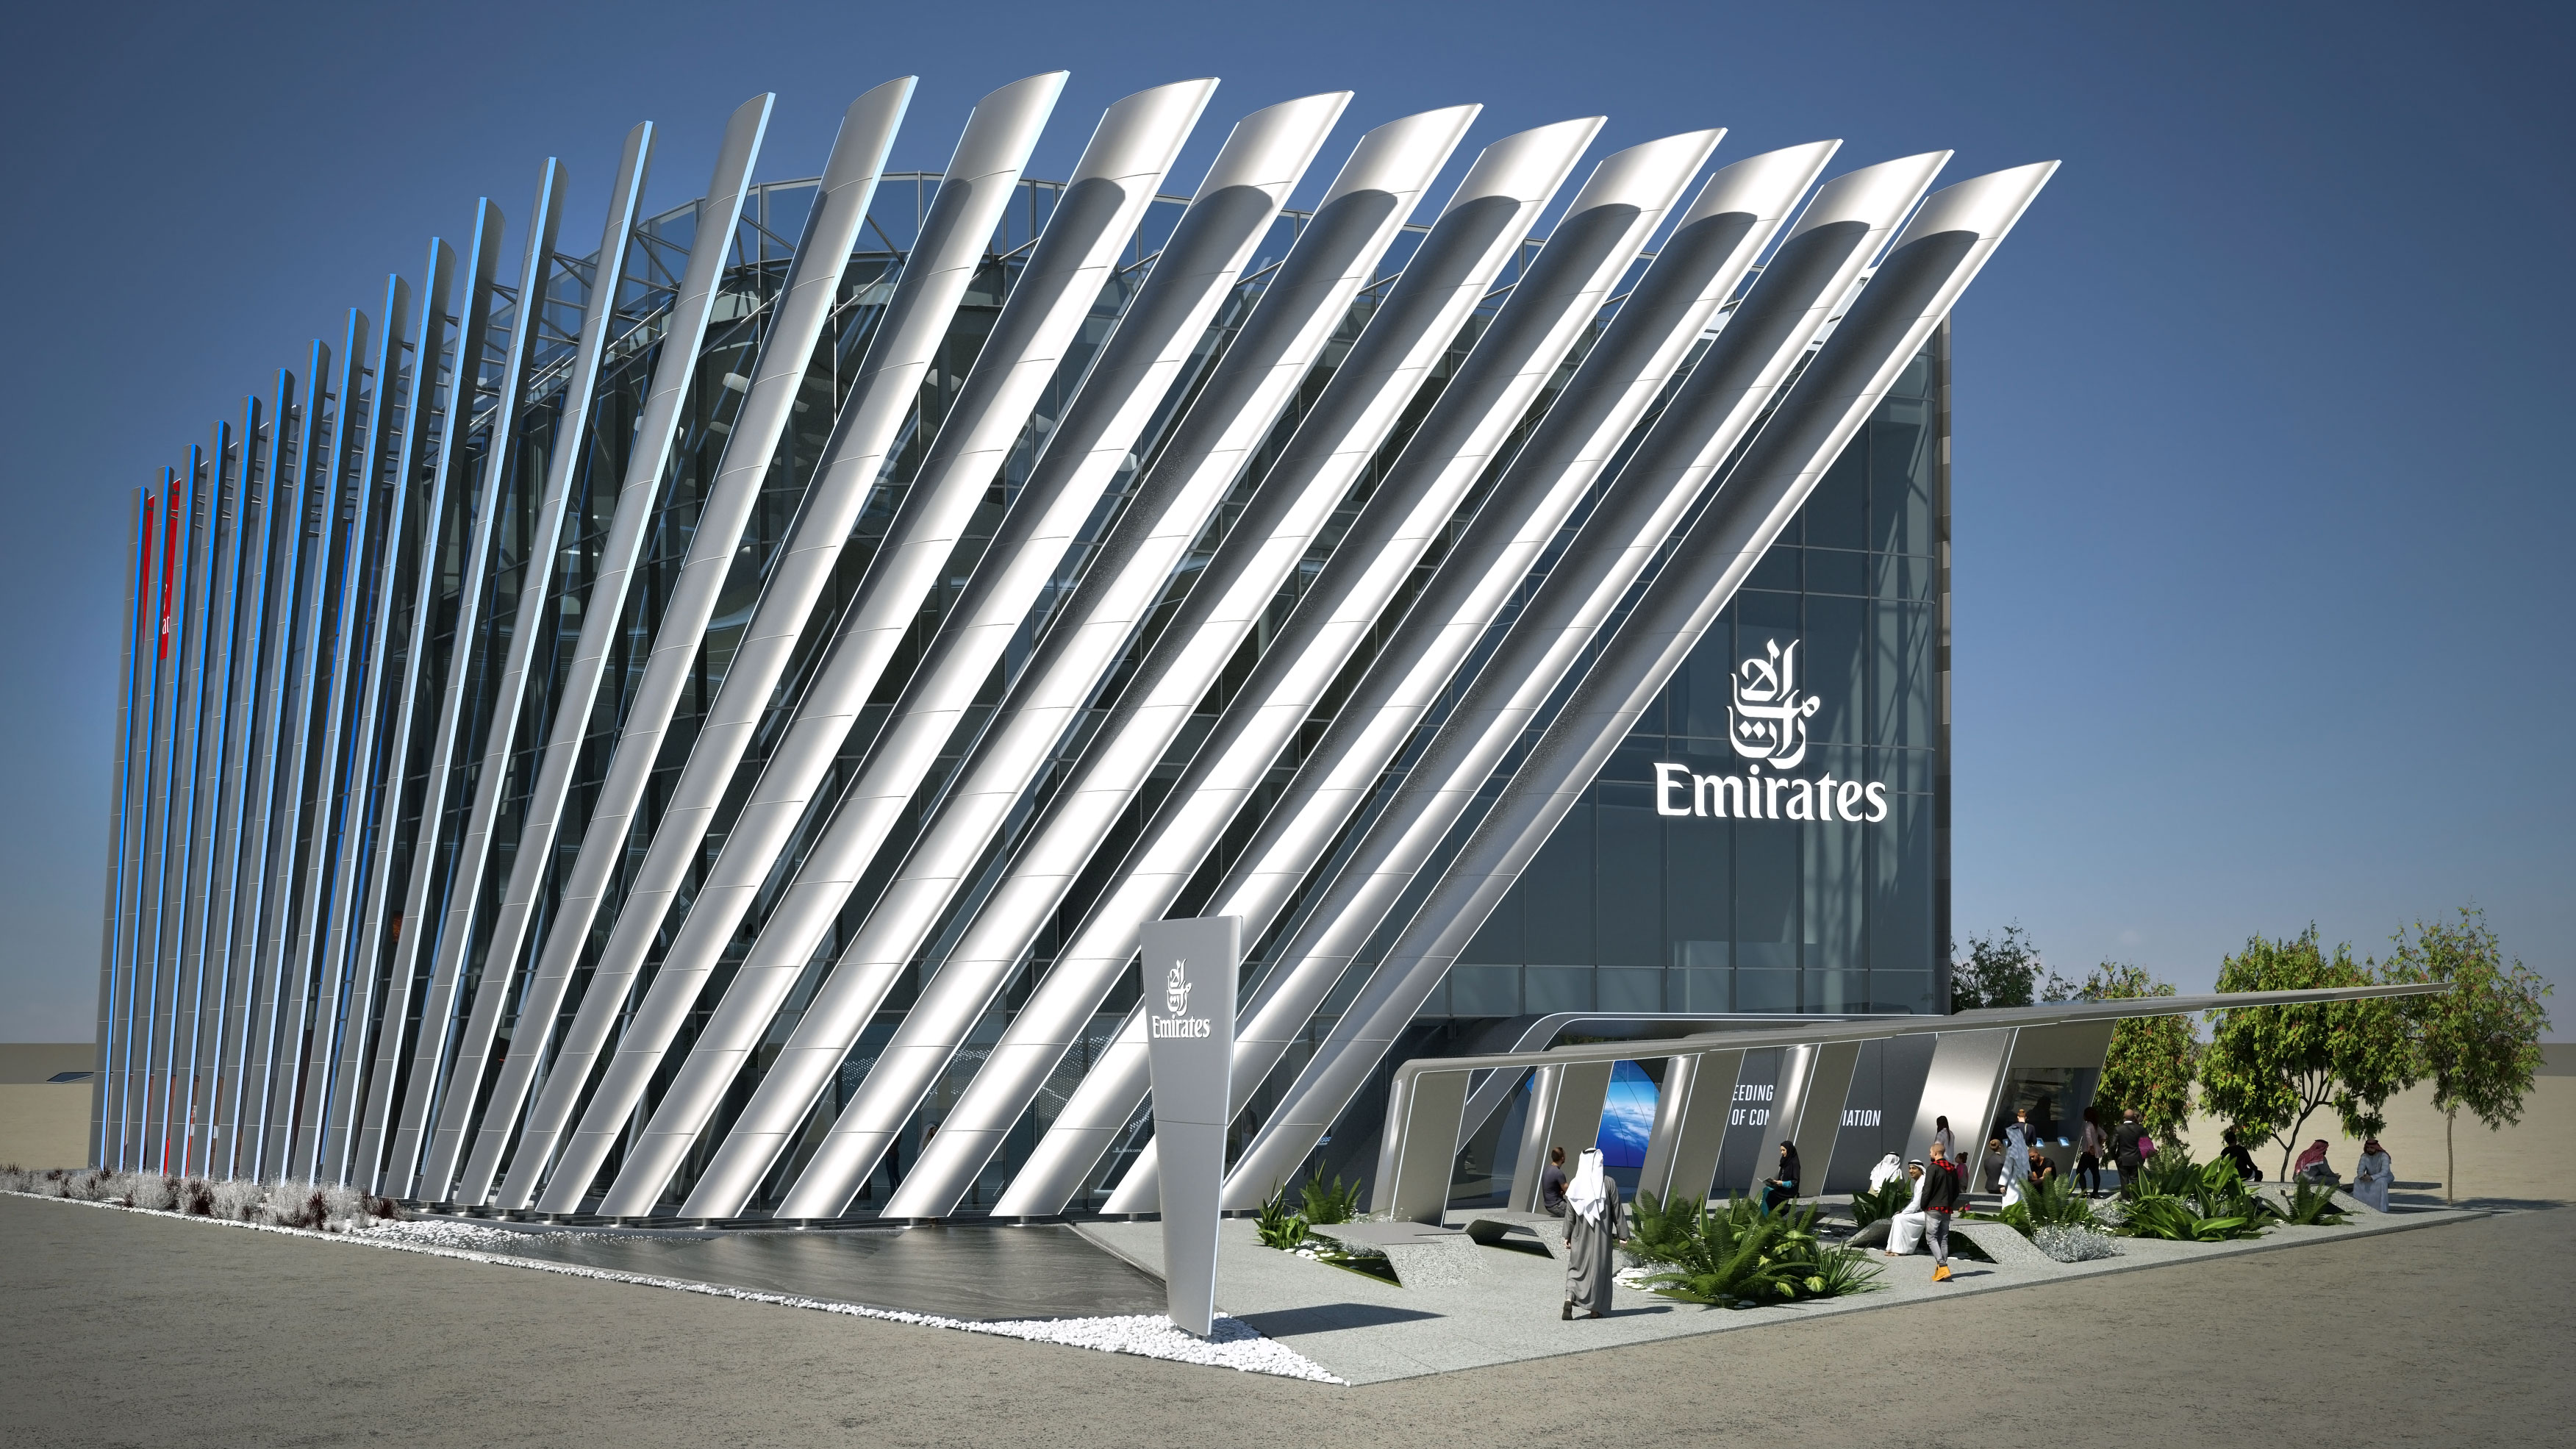 Expo am. Павильон Эмирейтс на Экспо. Emirates Expo 2020. Emirates Expo 2020 Pavillon. Emirates Airlines Expo 2020.